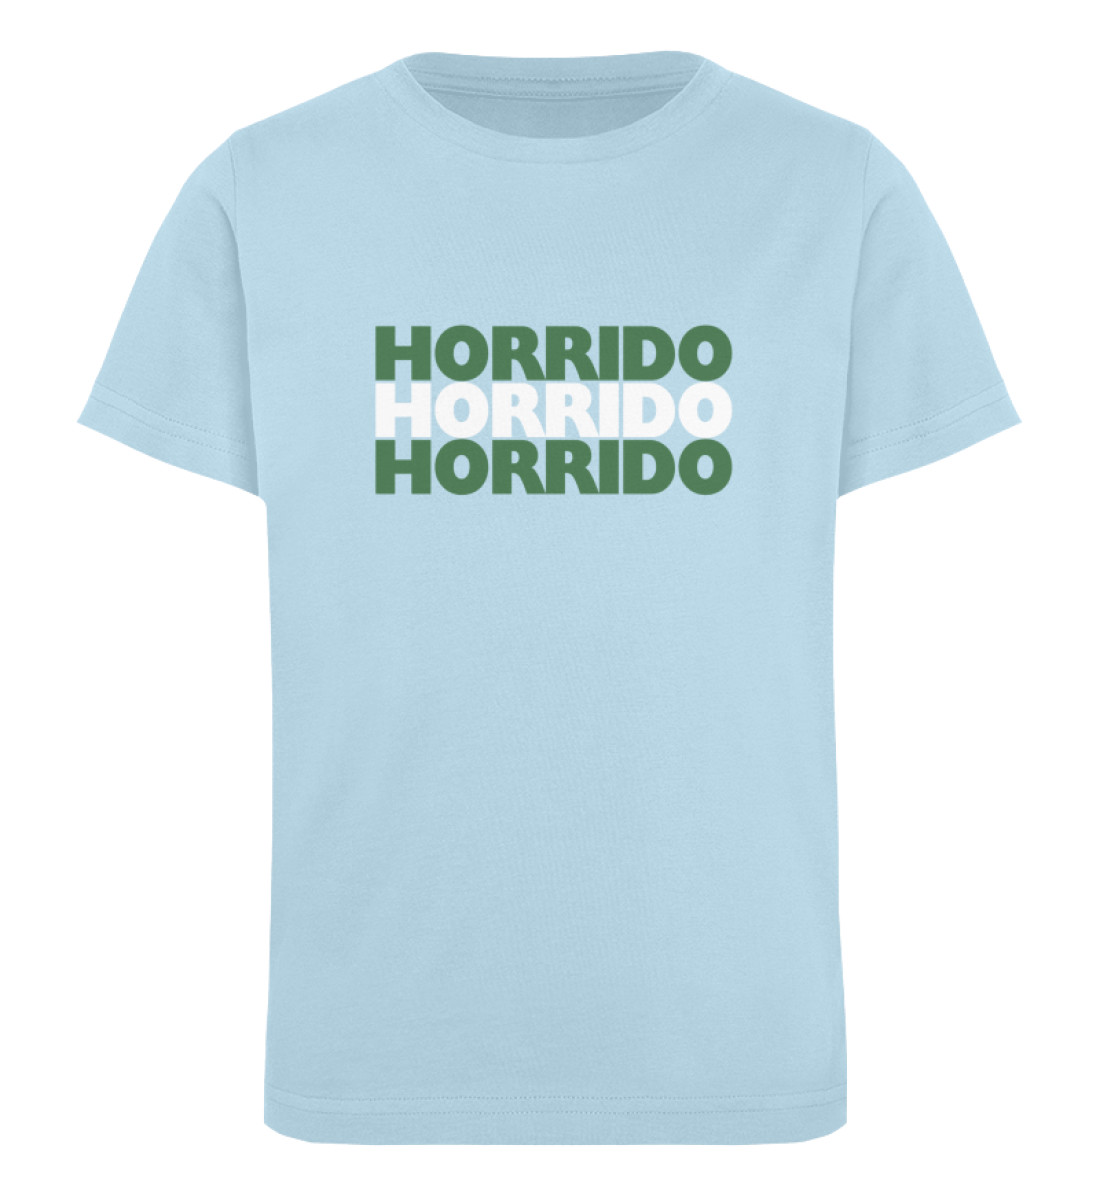 Horrido - Kinder Organic T-Shirt-6888